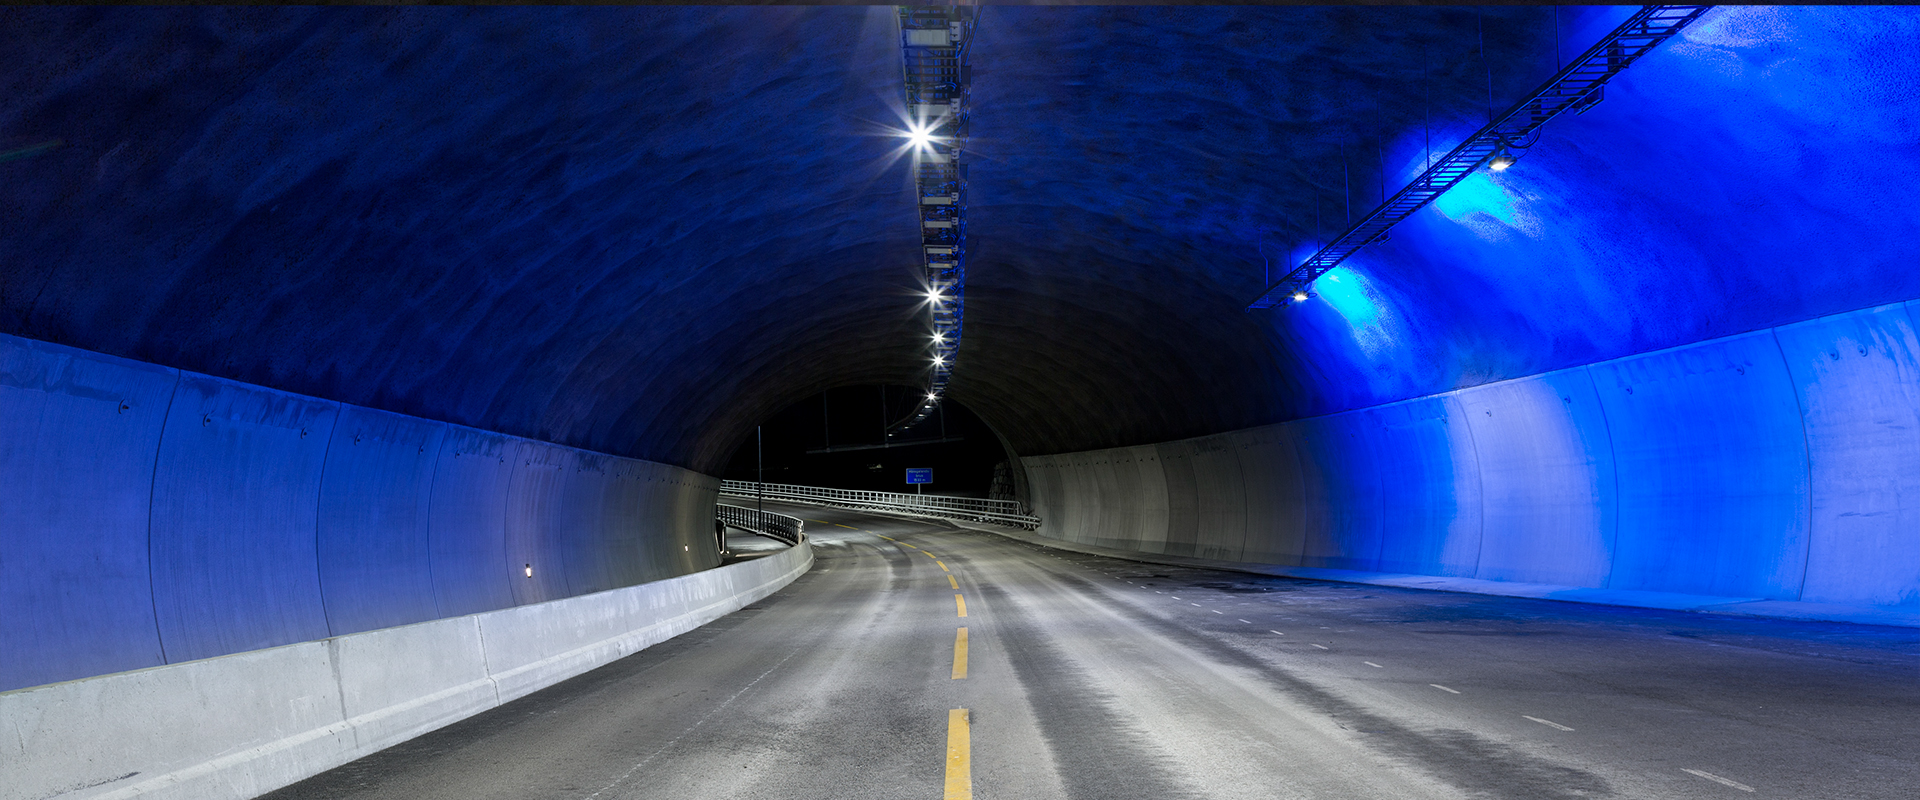 LED road tunnels lights